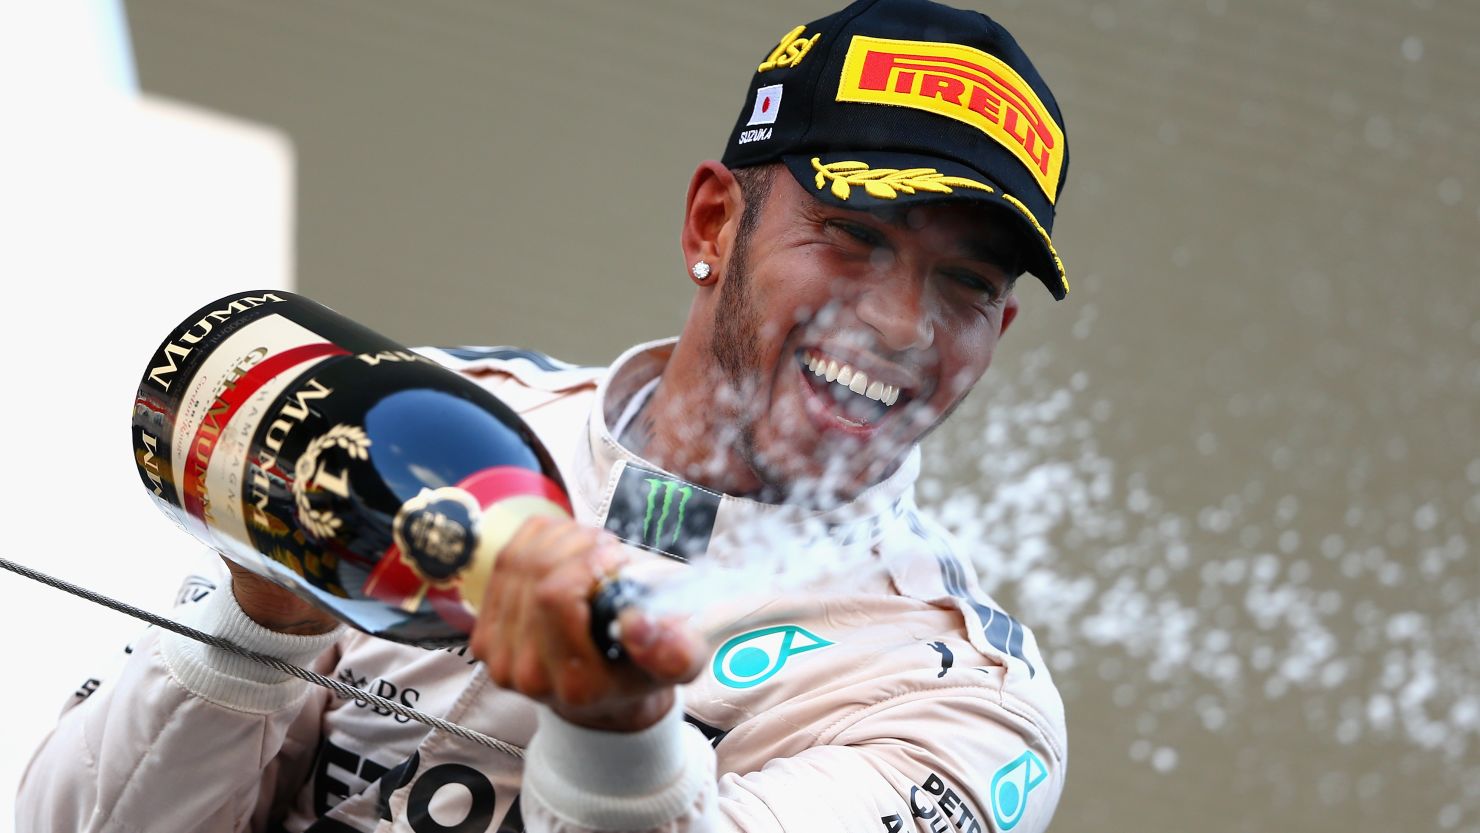 Lewis Hamilton celebrates on the podium after winning the Japanese Grand Prix at Suzuka.